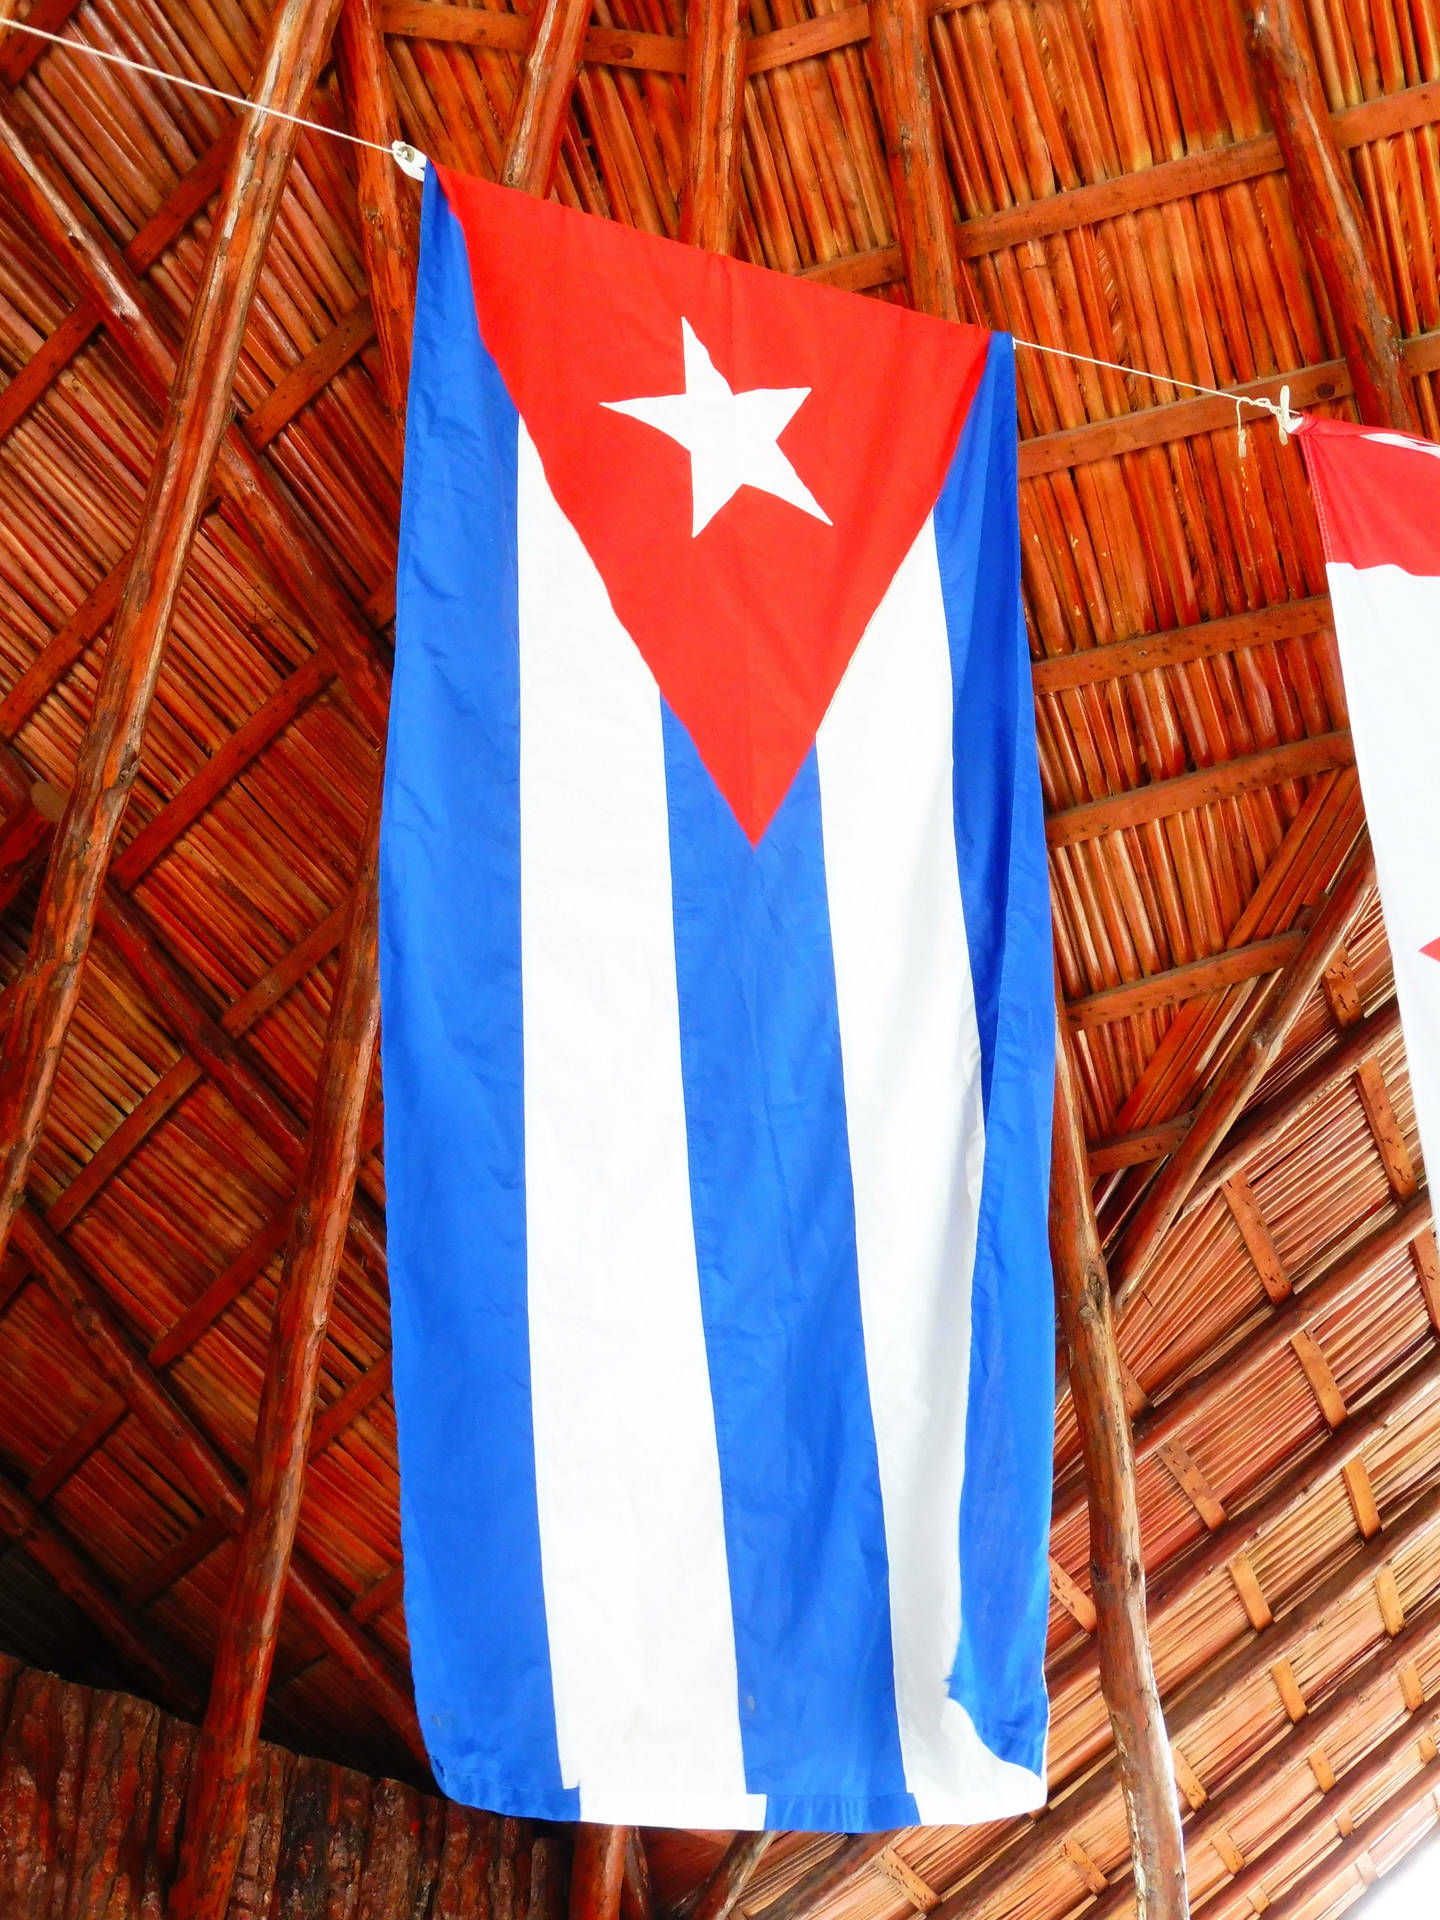 Cuban Flag Pictures